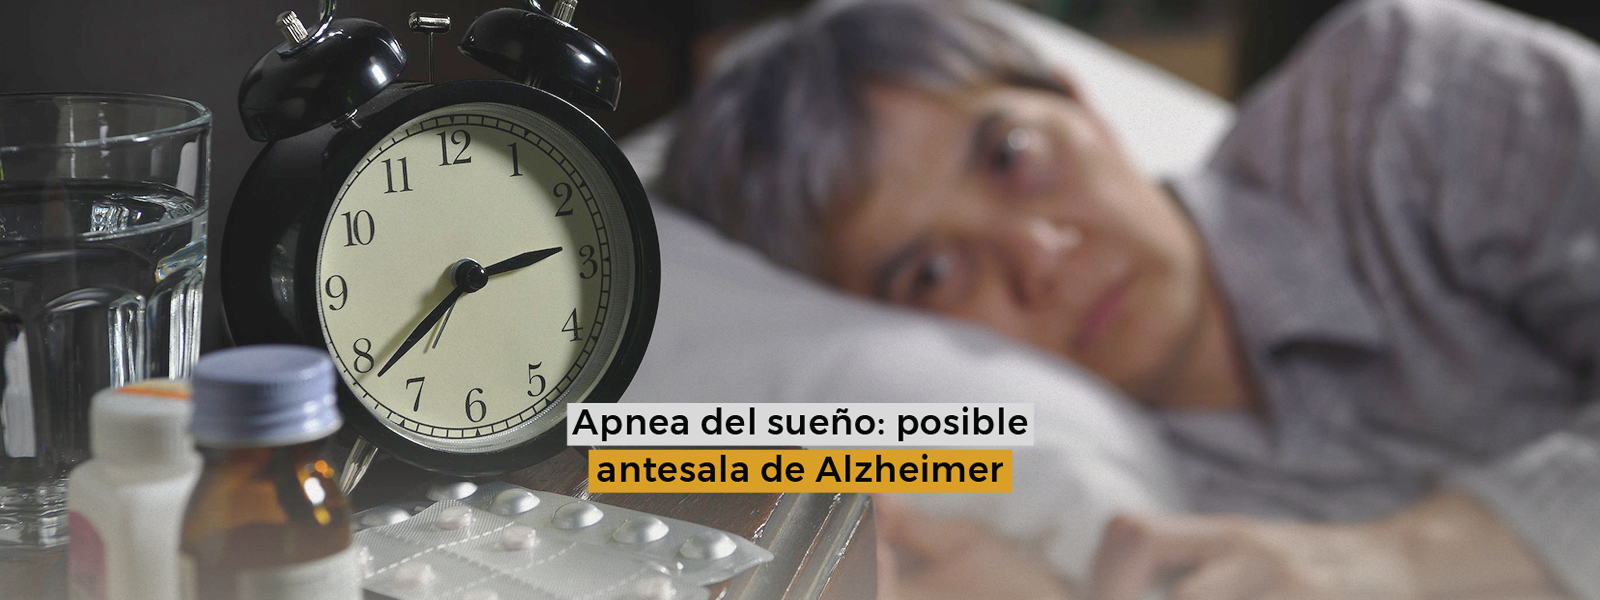 Apnea del sueño: posible antesala de Alzheimer